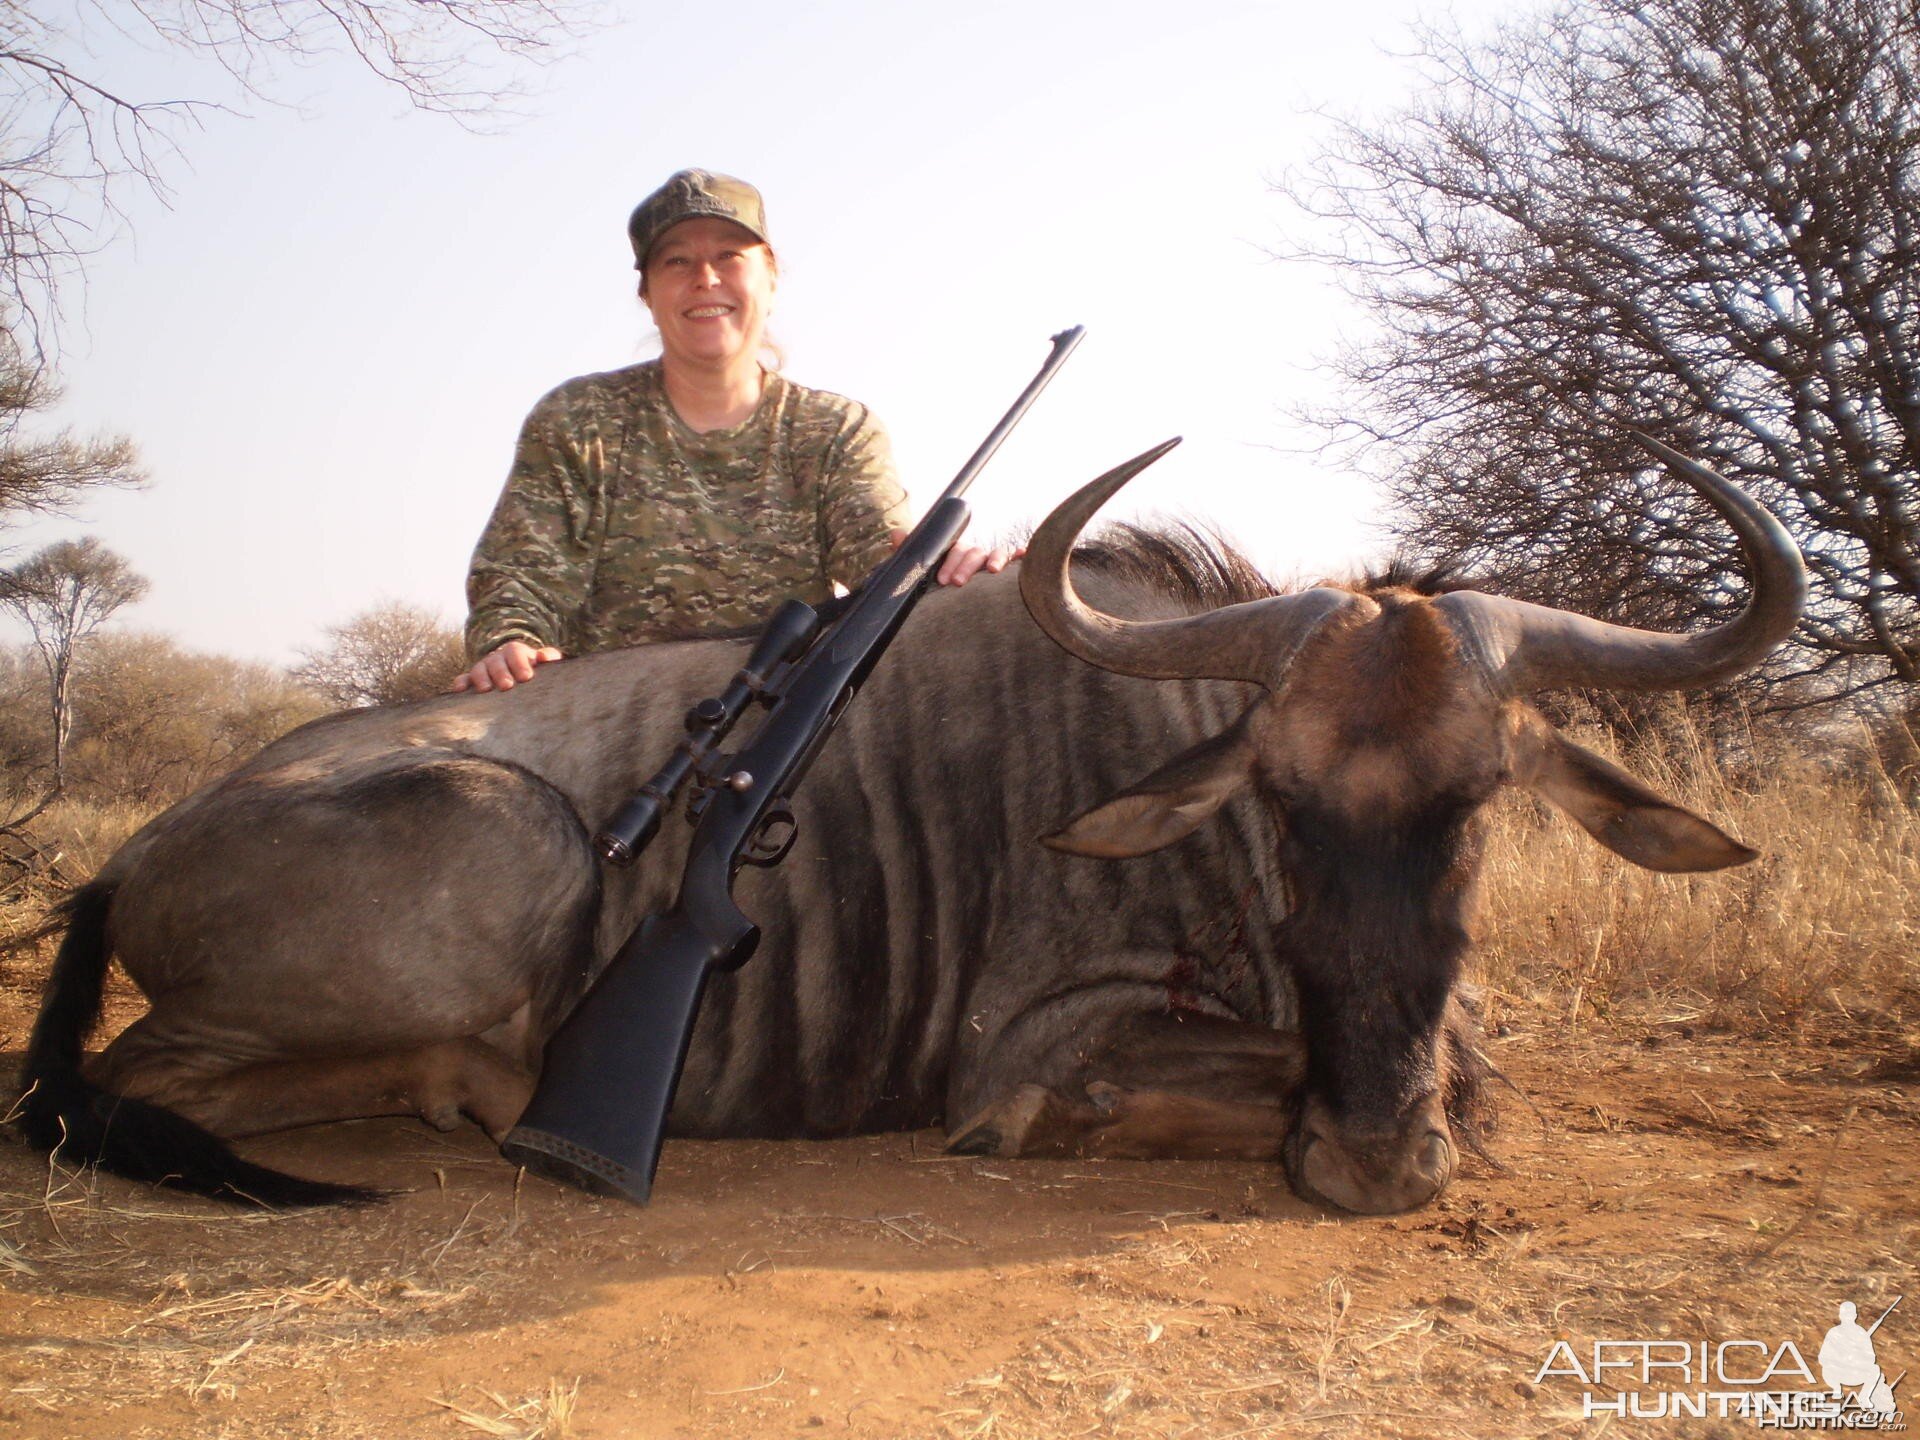 Blue Wildebeest hunt in South Africa